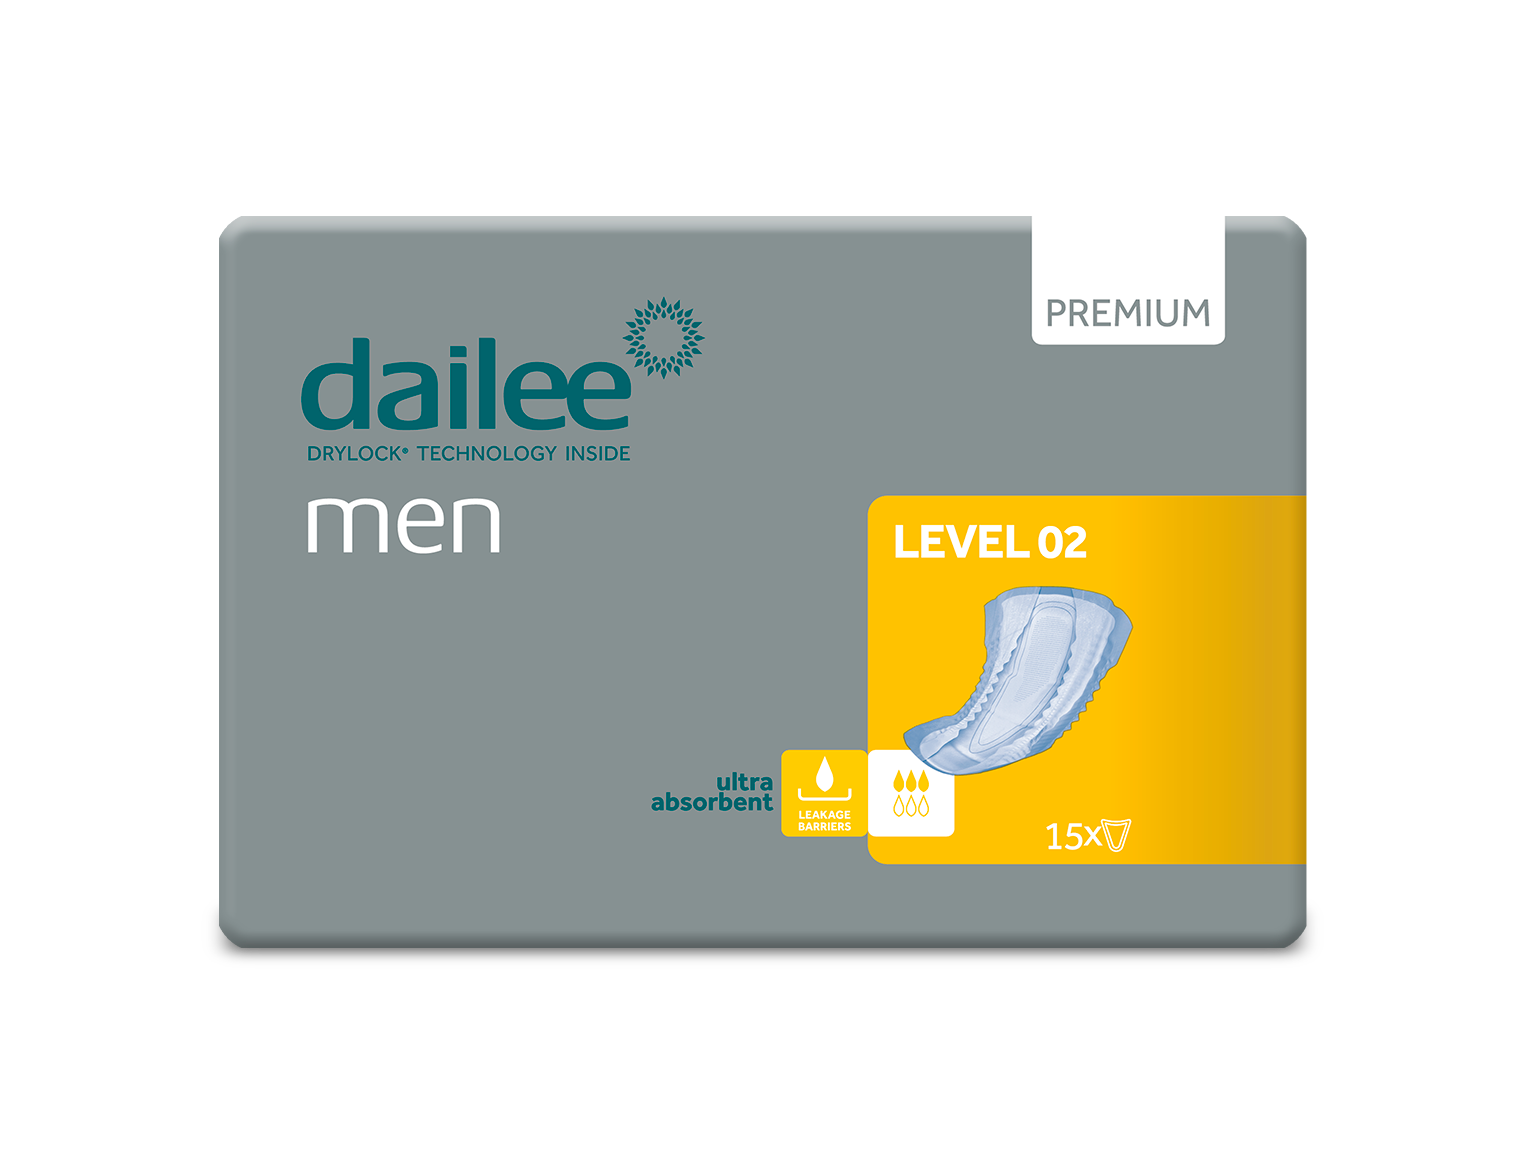 dailee_men_premium_level_02_thumb